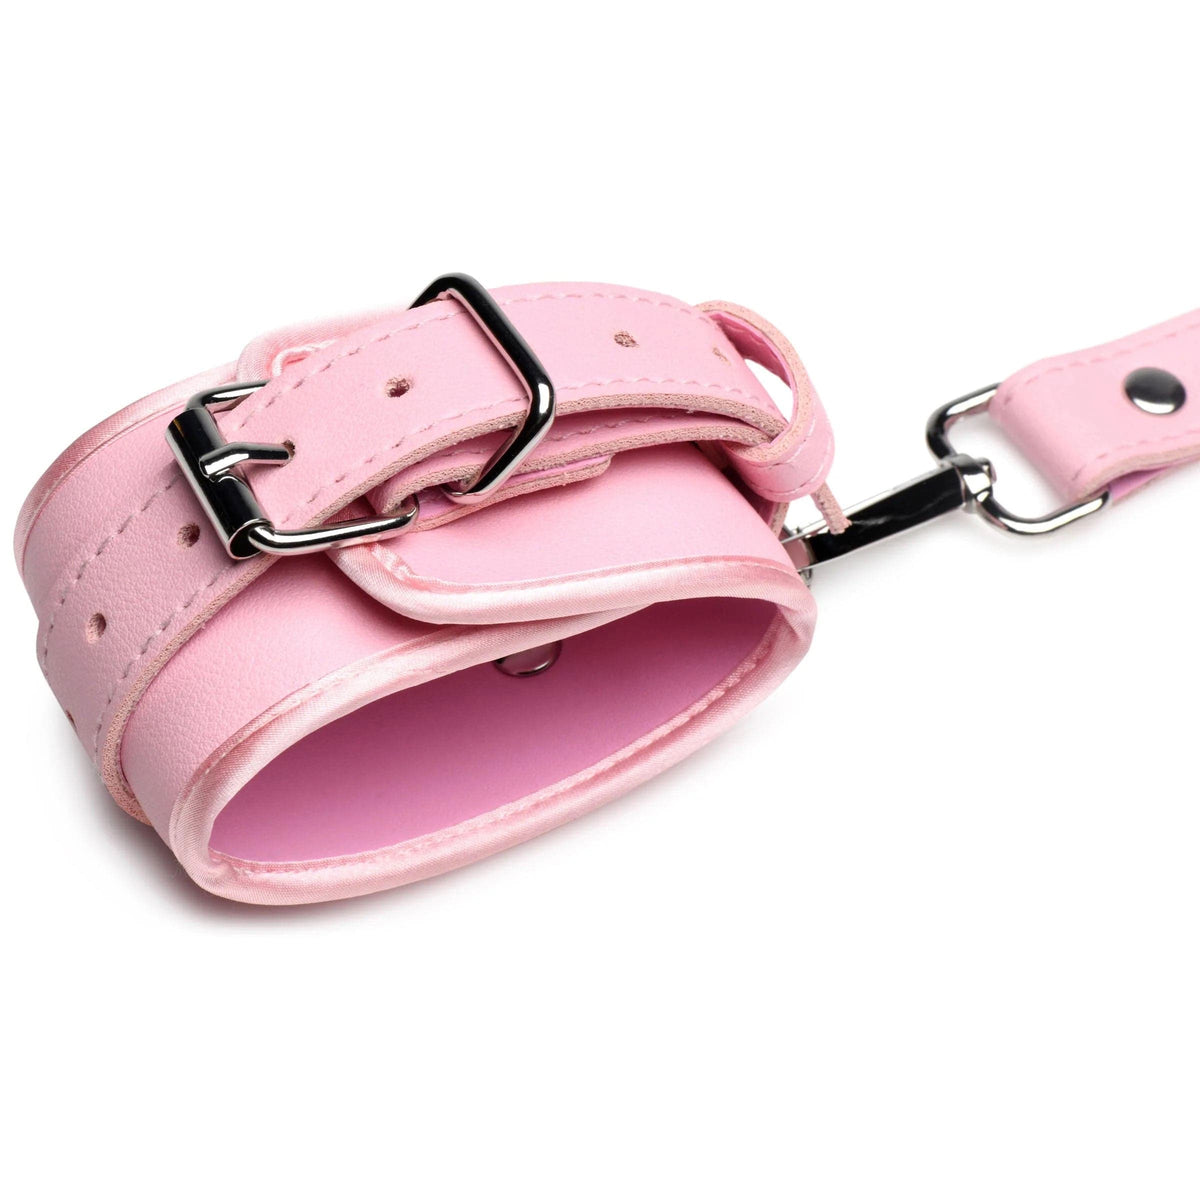 bondage harness with bows medium large pink